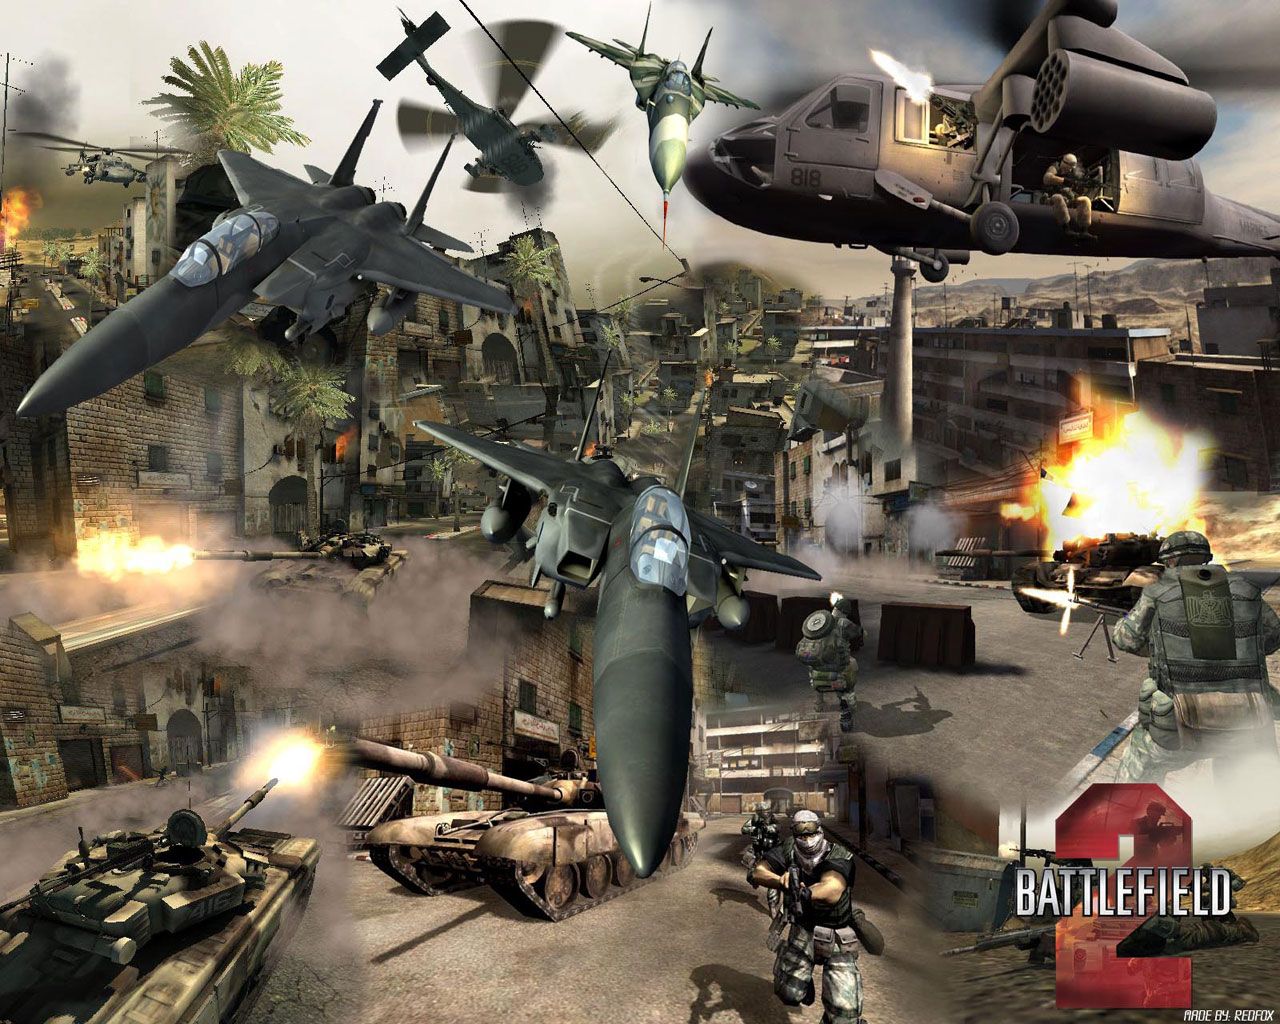 Battlefield 2 wallpaper picture download